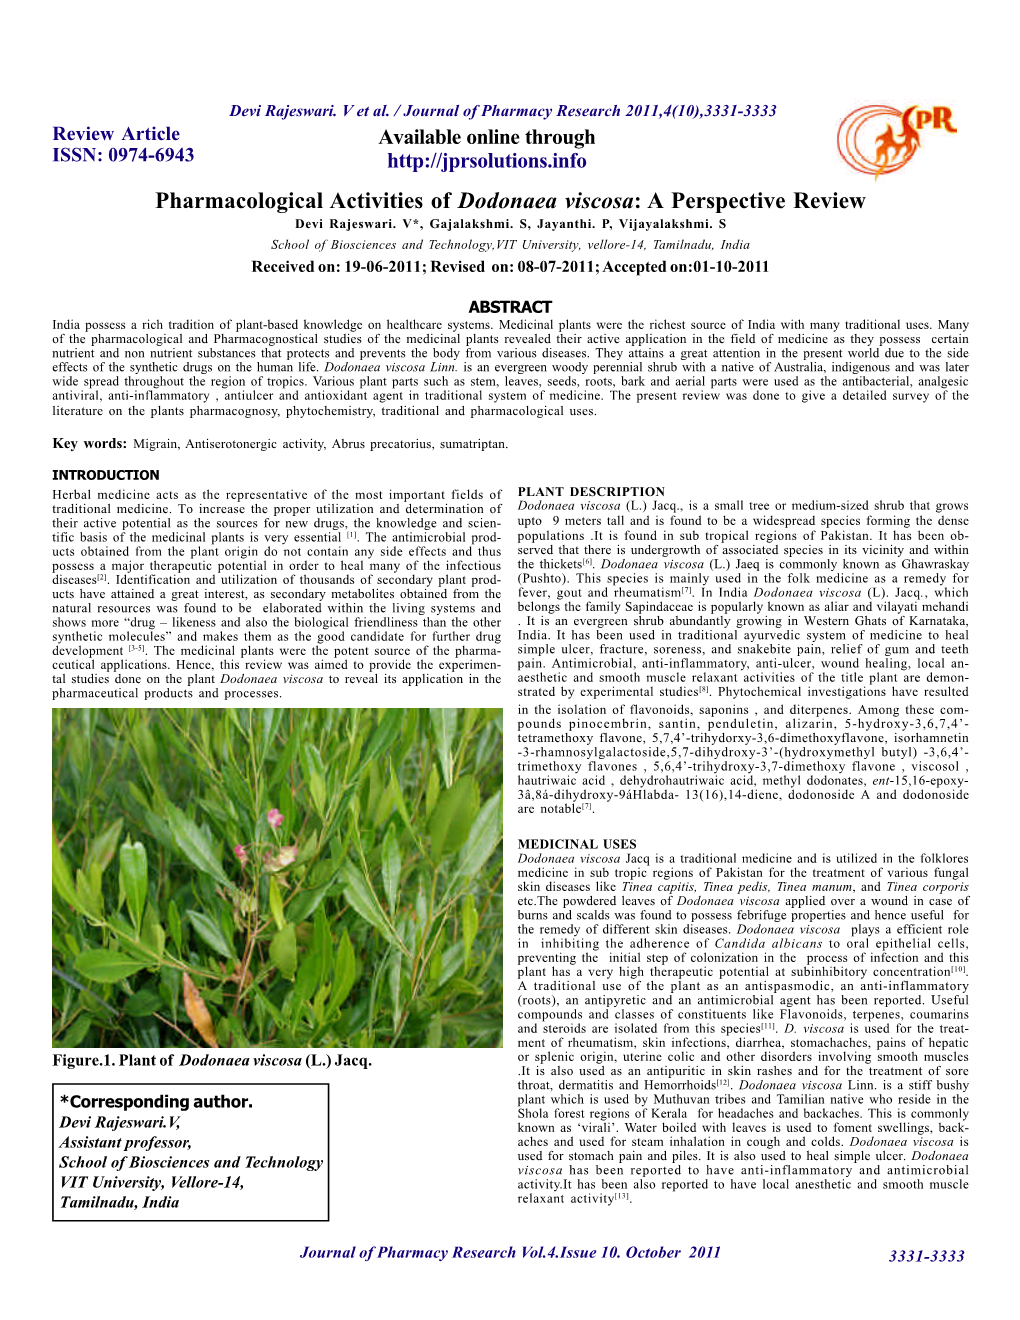 Pharmacological Activities of Dodonaea Viscosa: a Perspective Review Devi Rajeswari